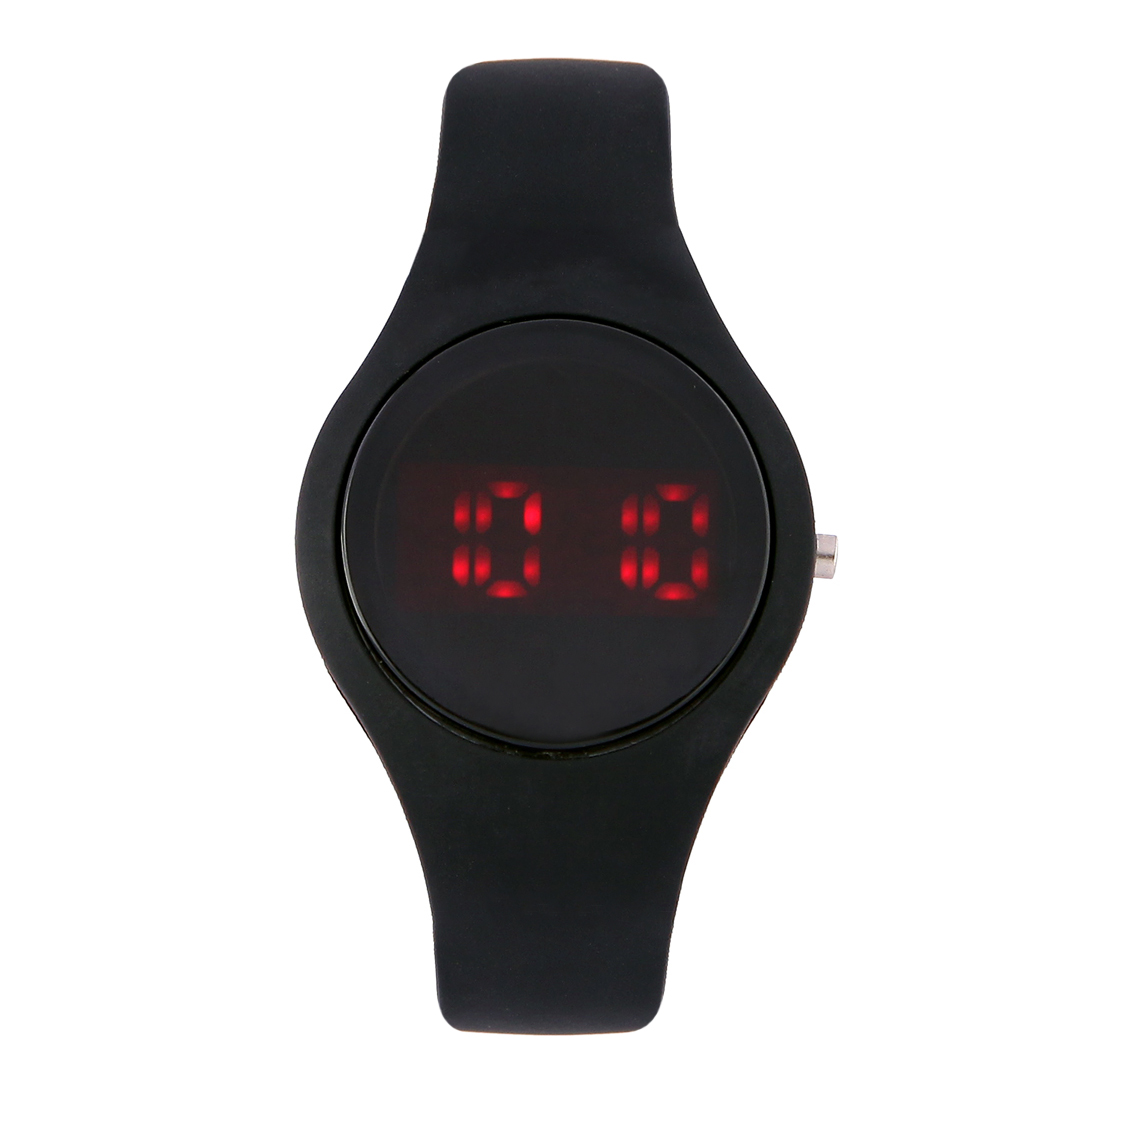 ساعت مچی دیجیتال مدل LE 2915 – ME – خرید ساعت مچی